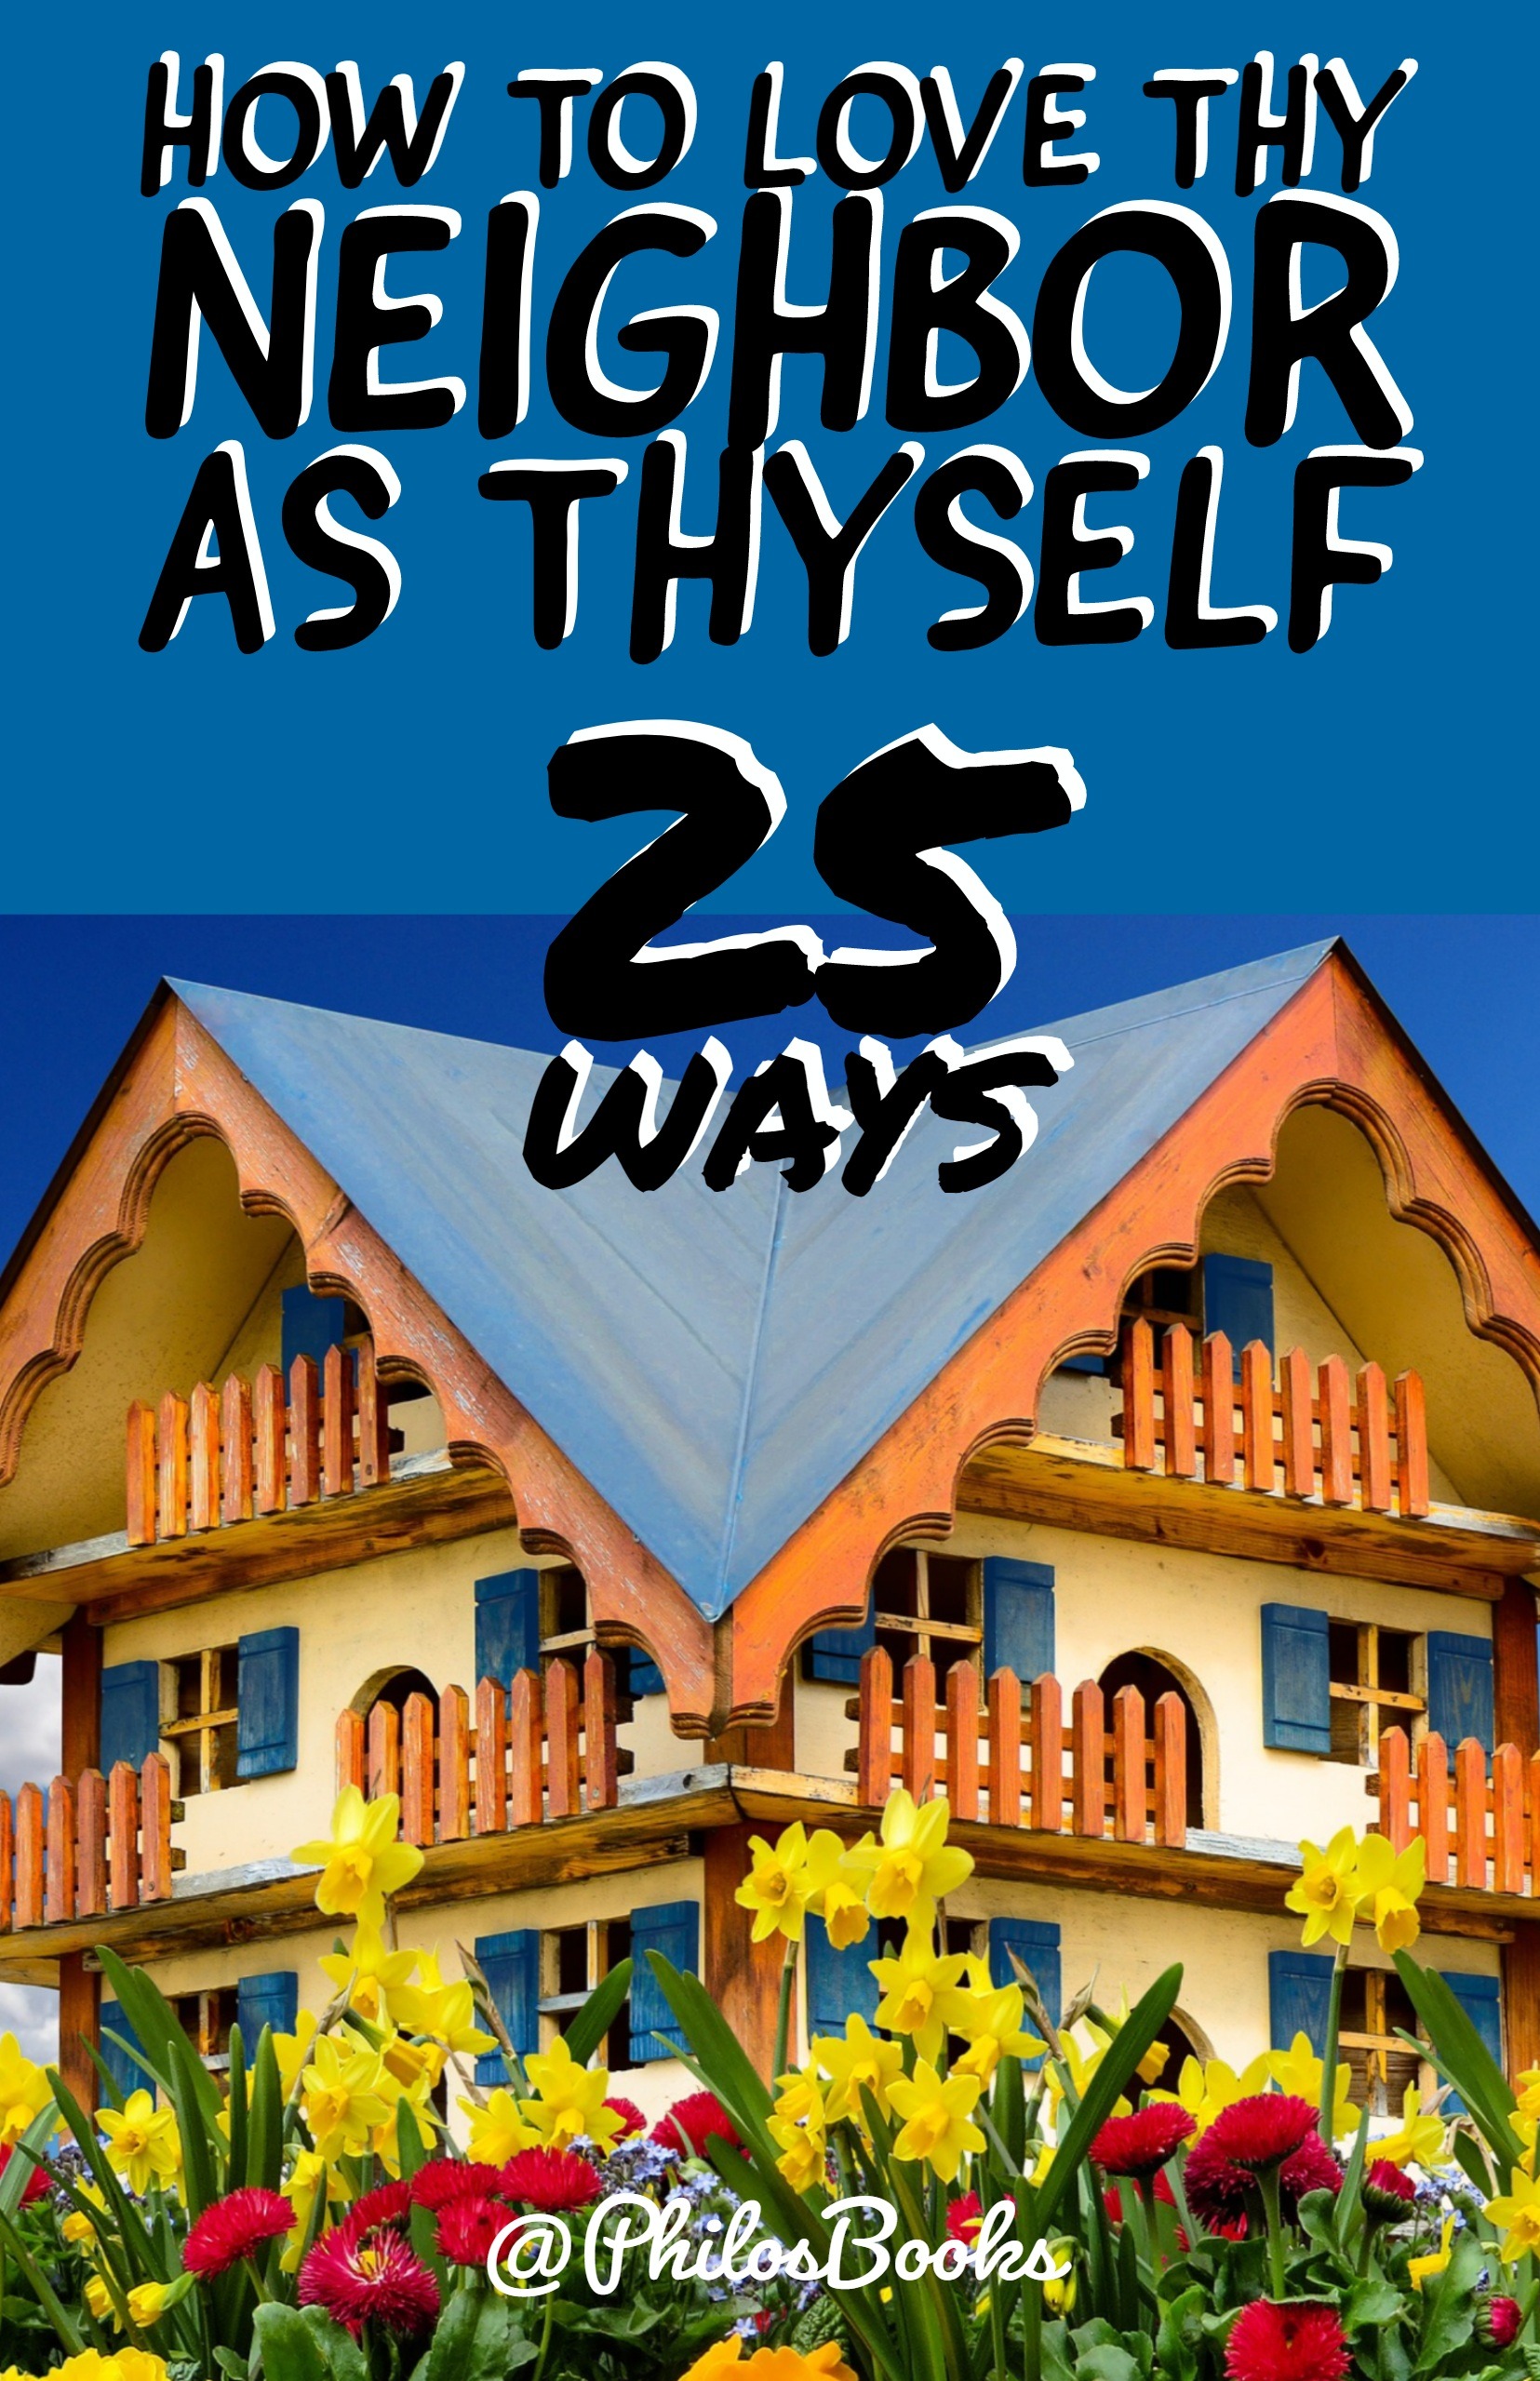 How to Love Thy Neighbor as Thyself 25 Ways